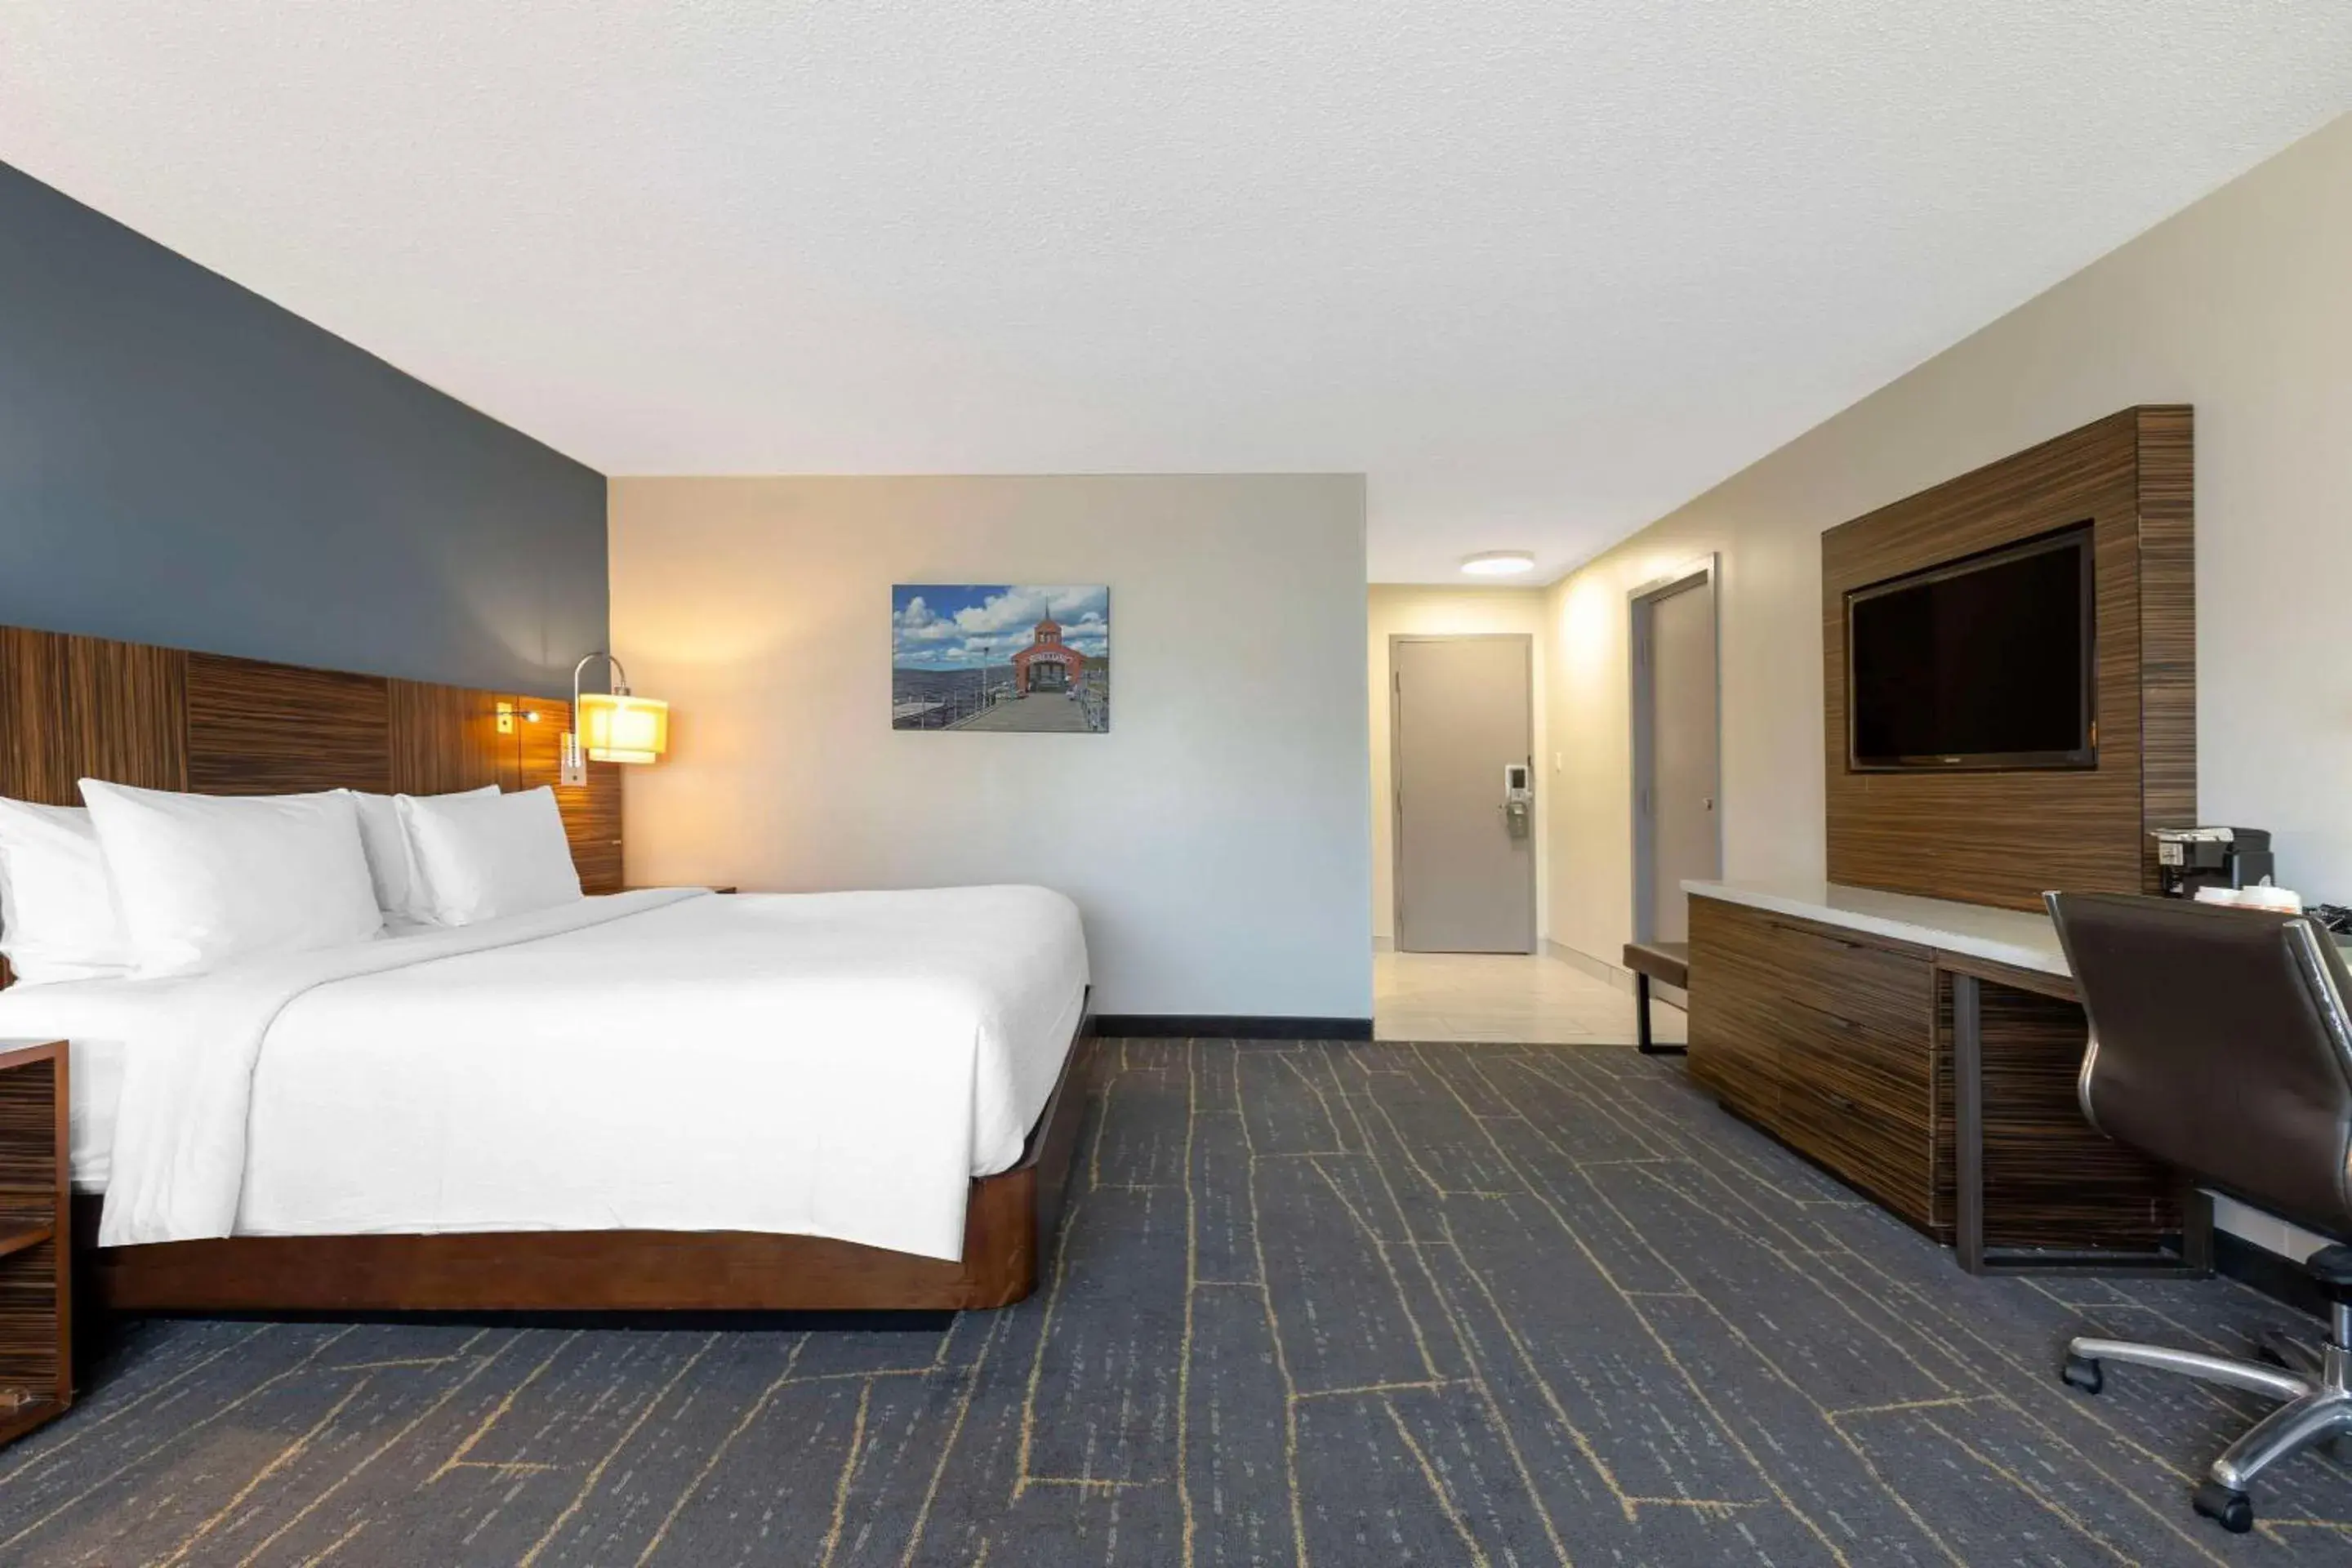 Bedroom, Bed in Quality Inn near Finger Lakes and Seneca Falls